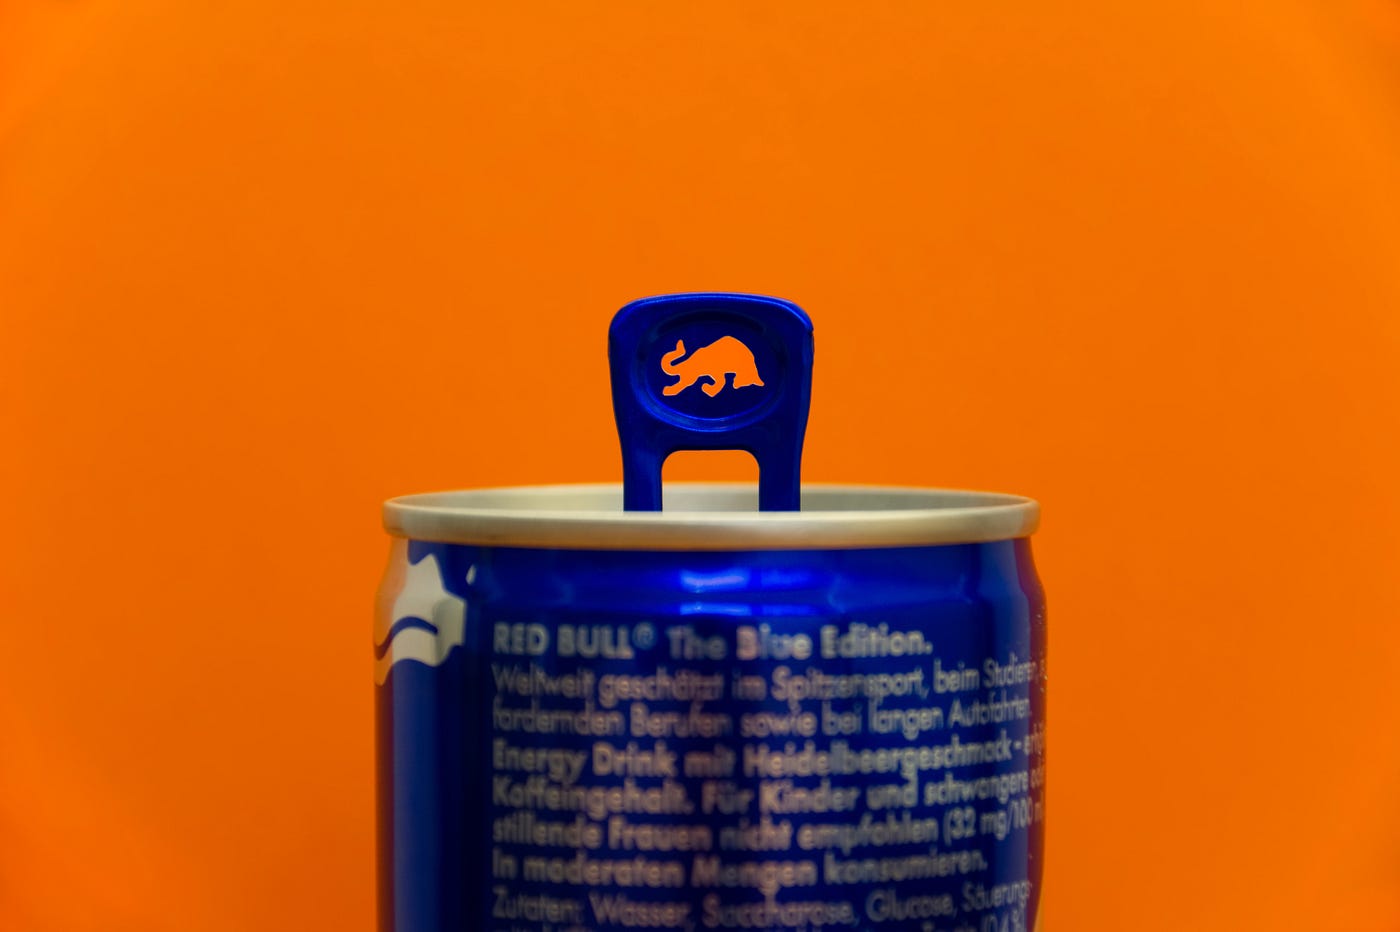 Red Bull's Corporate Branding Strategy: How Dominate | Better Marketing